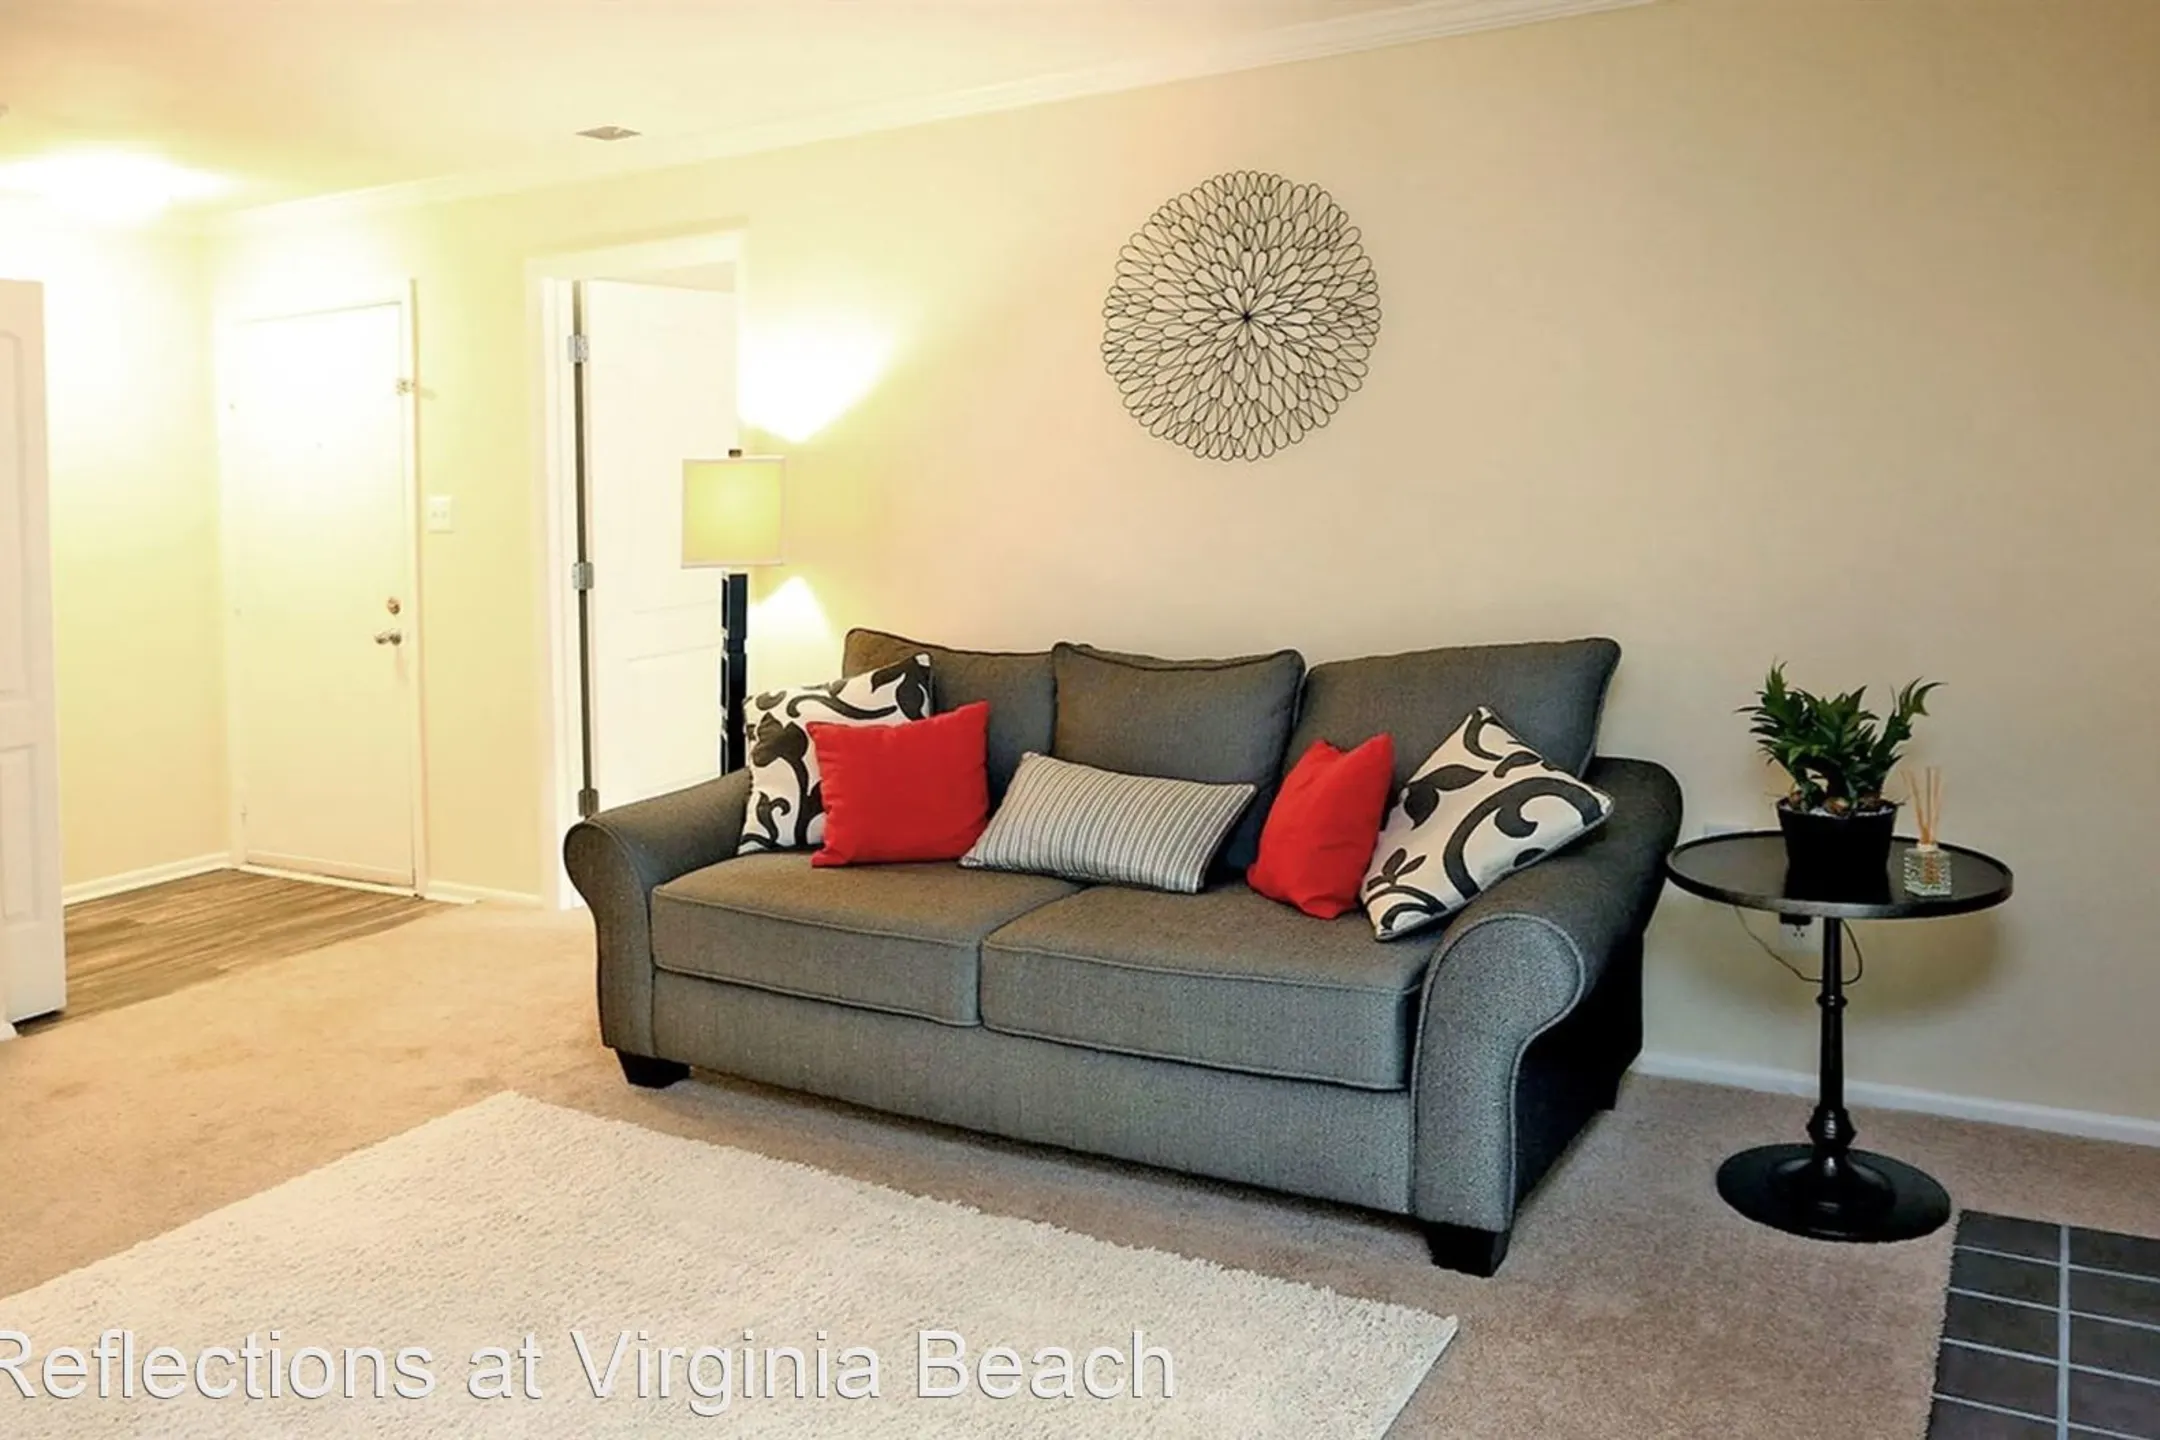 Living Room - Reflections at Virginia Beach - Virginia Beach, VA